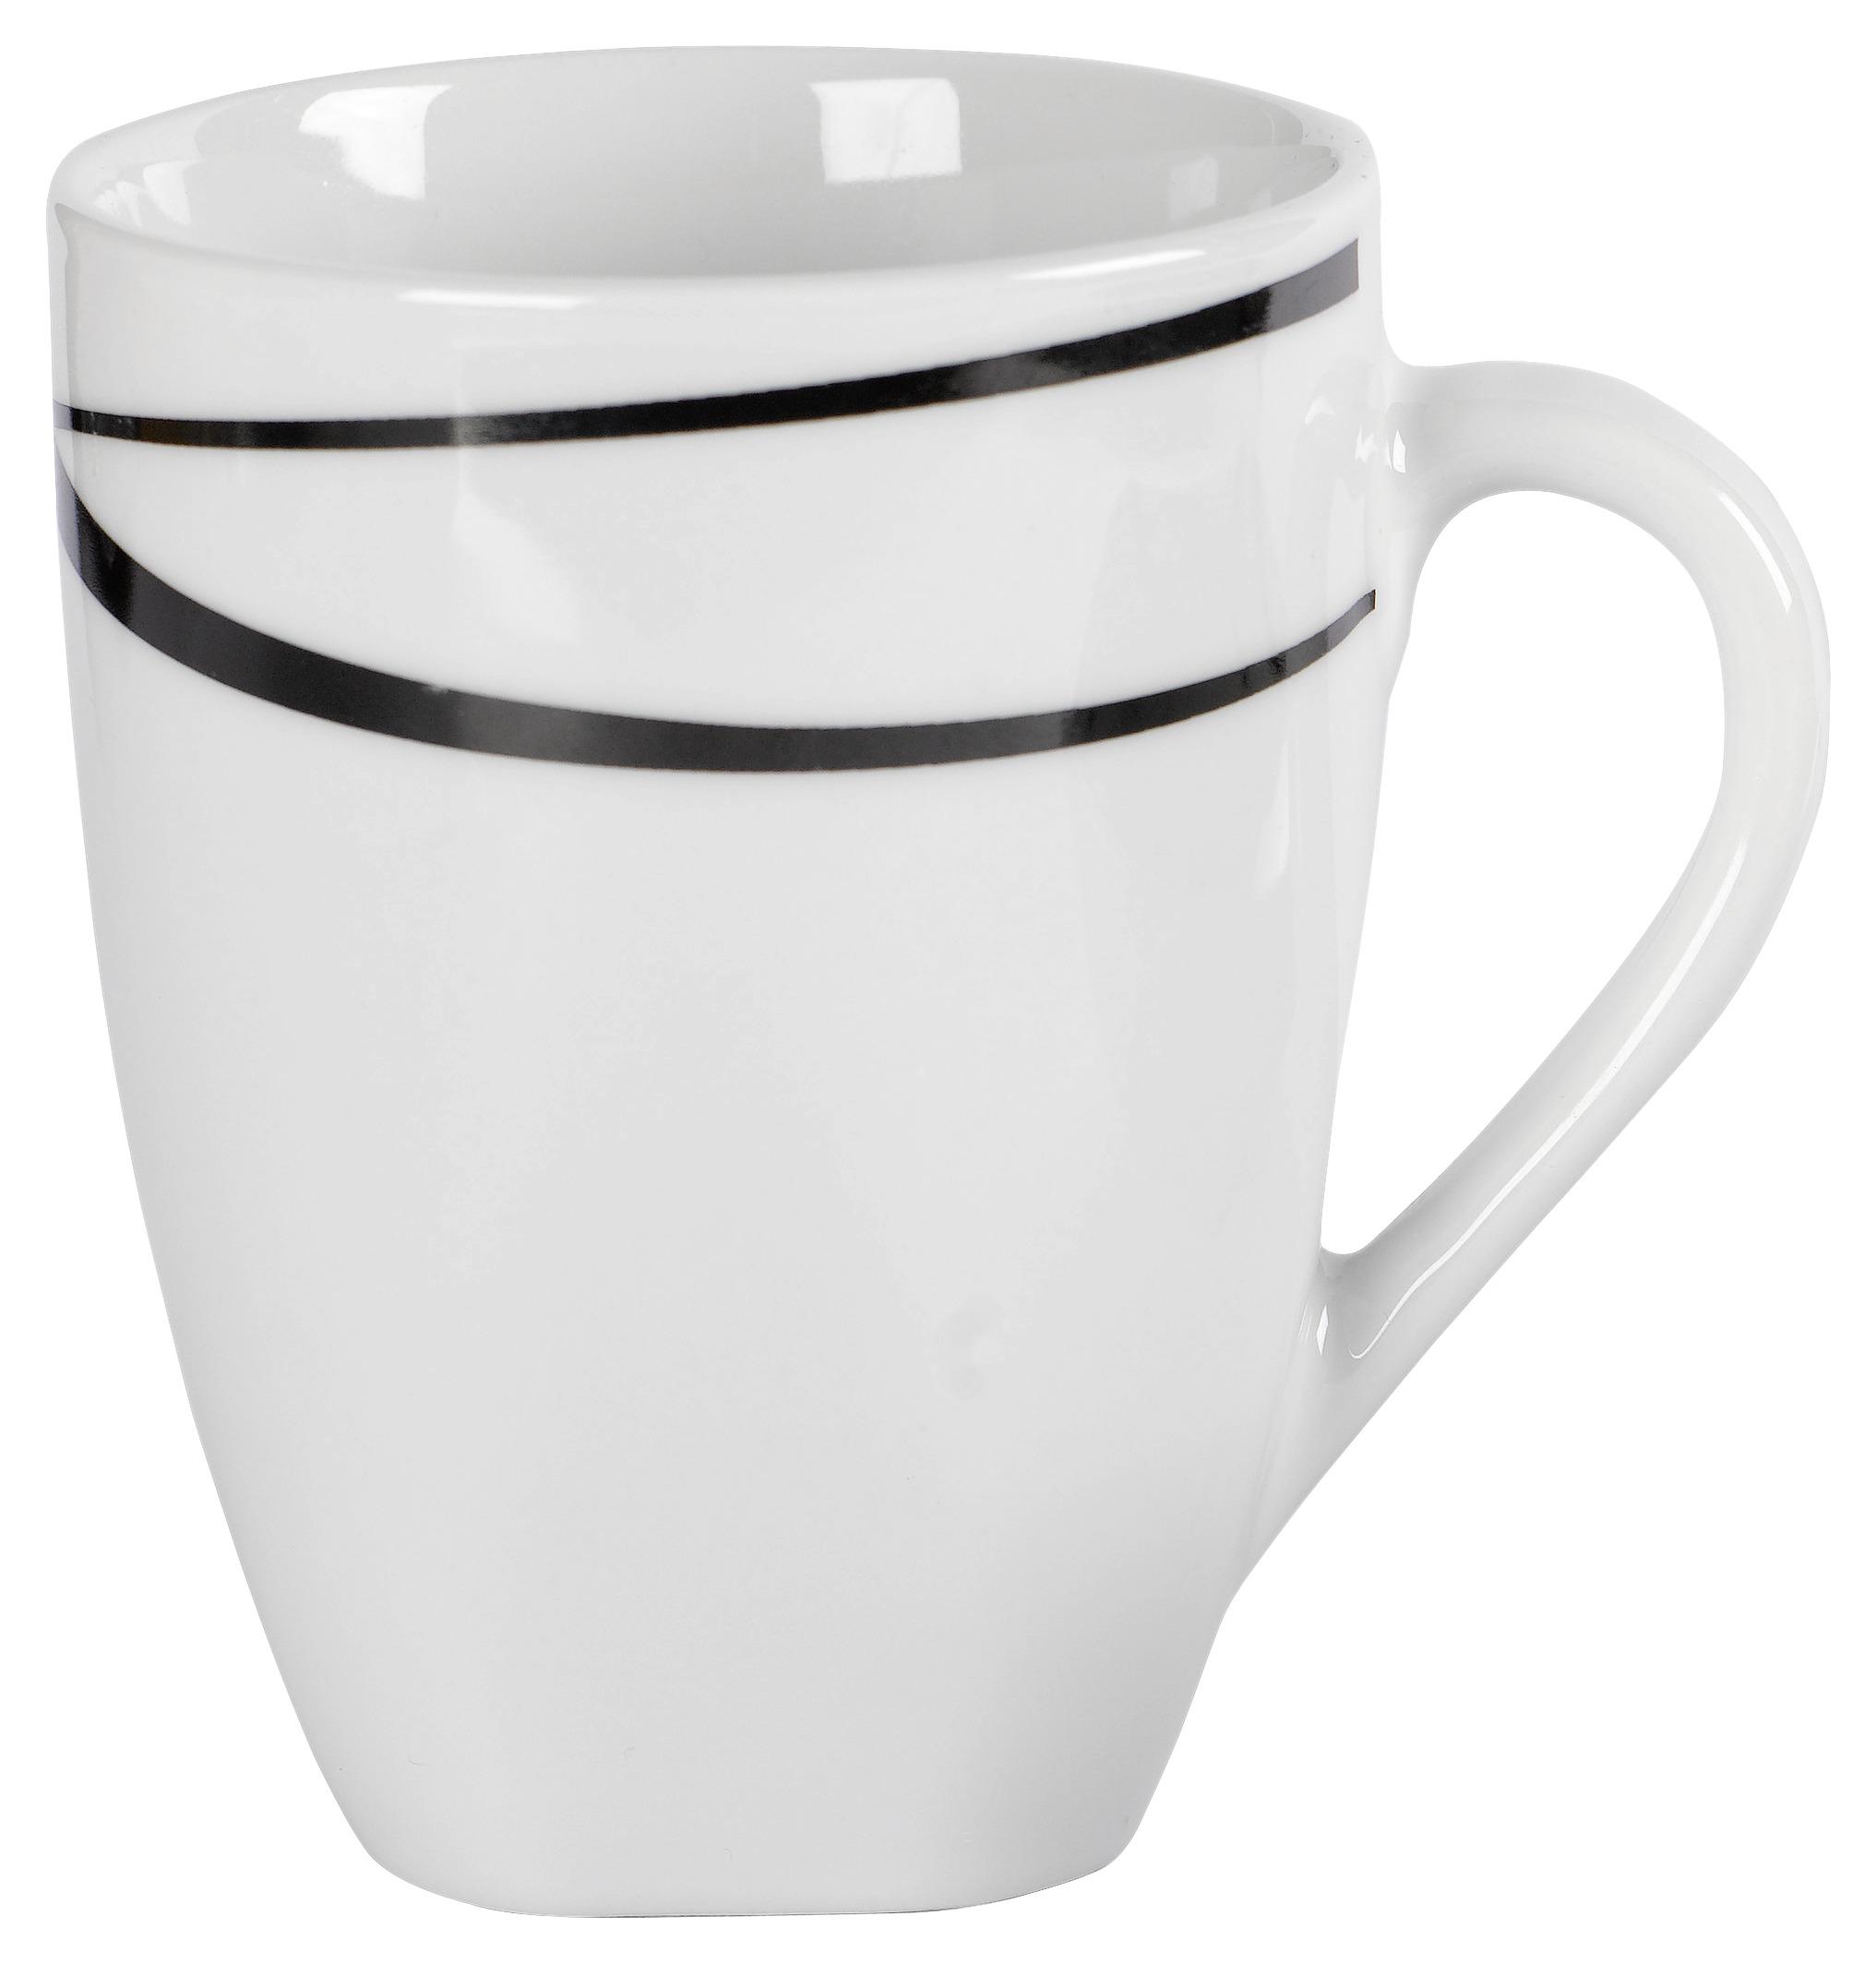 Kaffeebecherset Oslo aus Porzellan, 6-teilig - Schwarz/Weiß, Basics, Keramik (30/22/14,5cm) - Mäser